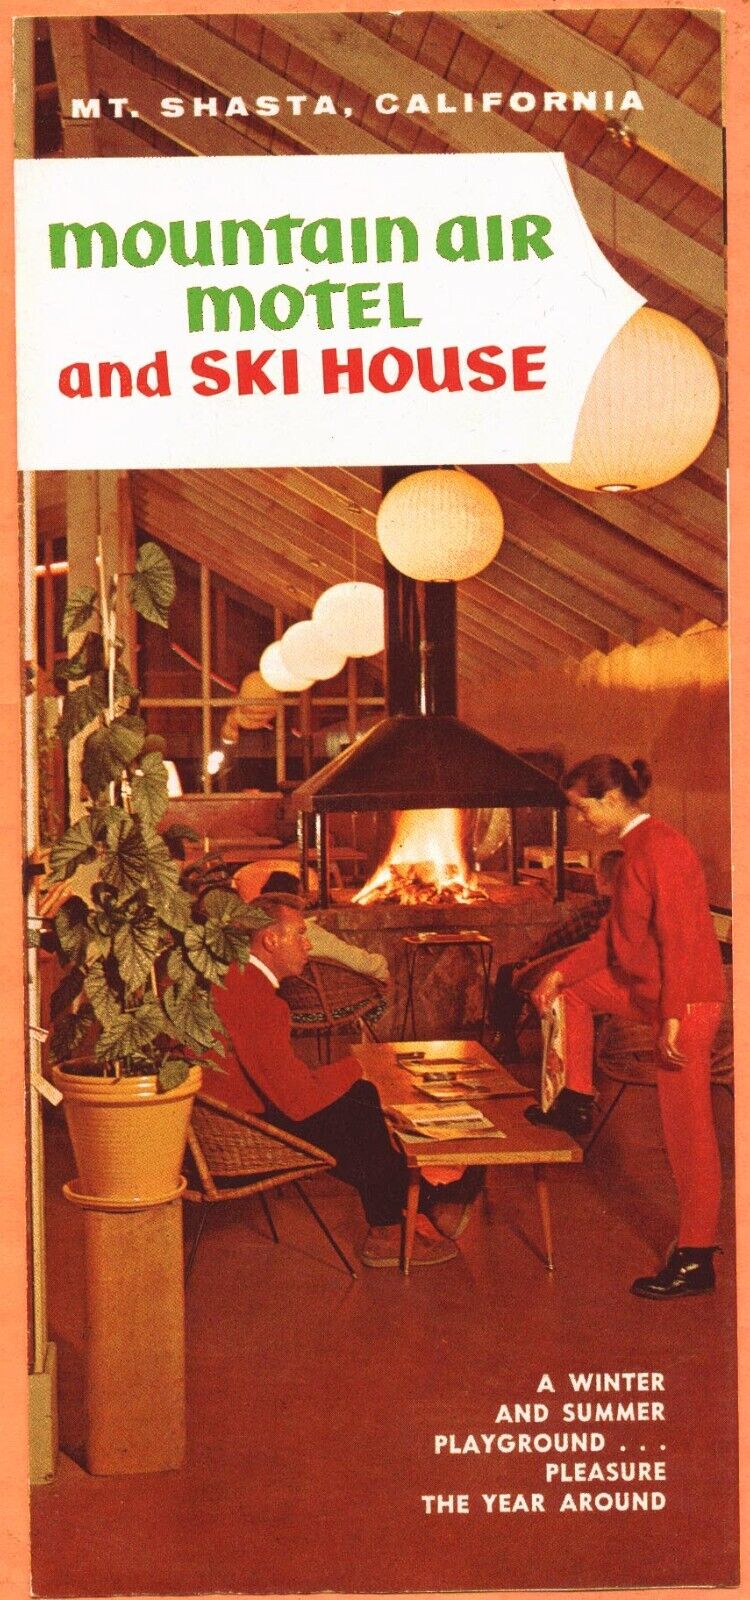 Mount Shasta CA Mountain Air Motel & Ski House Brochure circa late-1950s